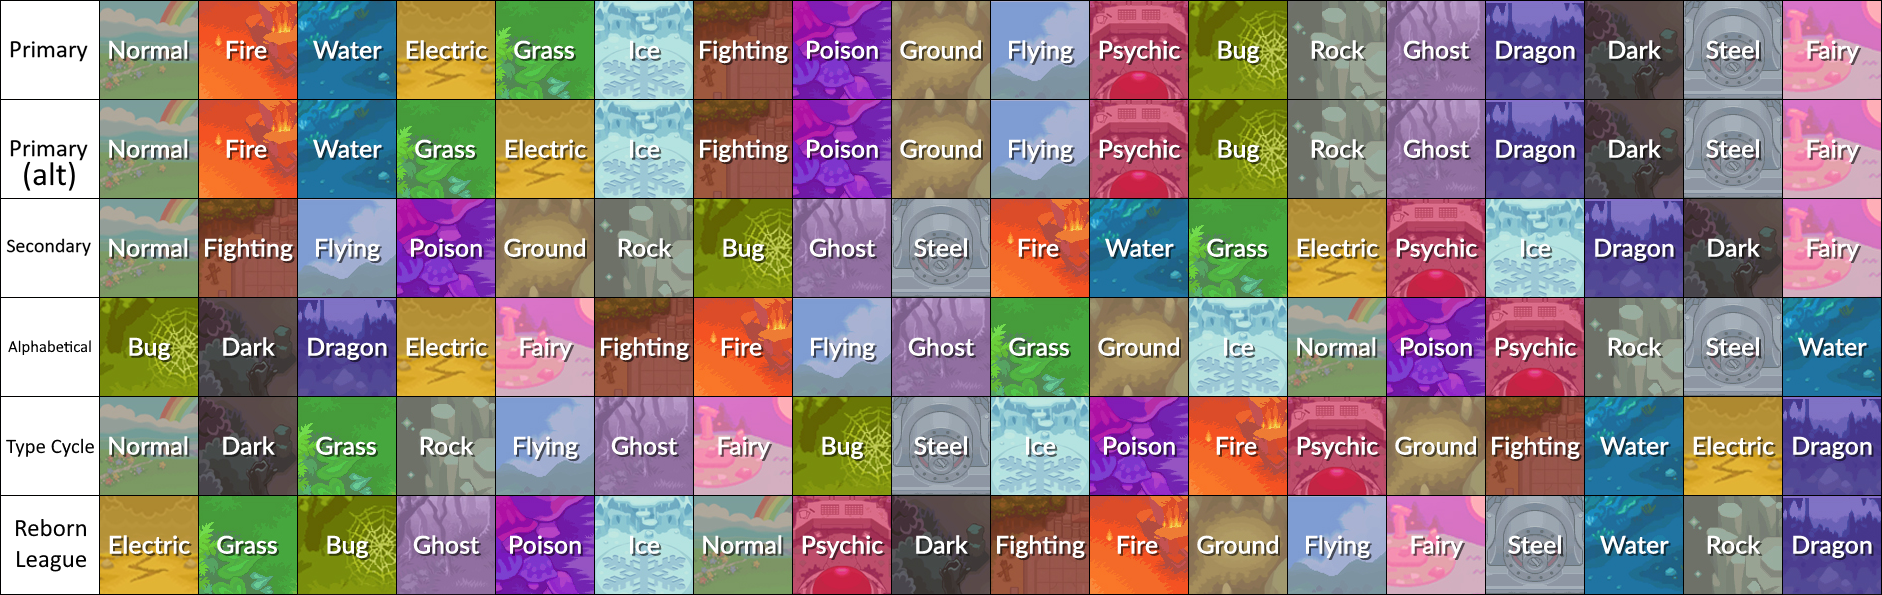 Pokemon Type Chart by merryrosemary on DeviantArt